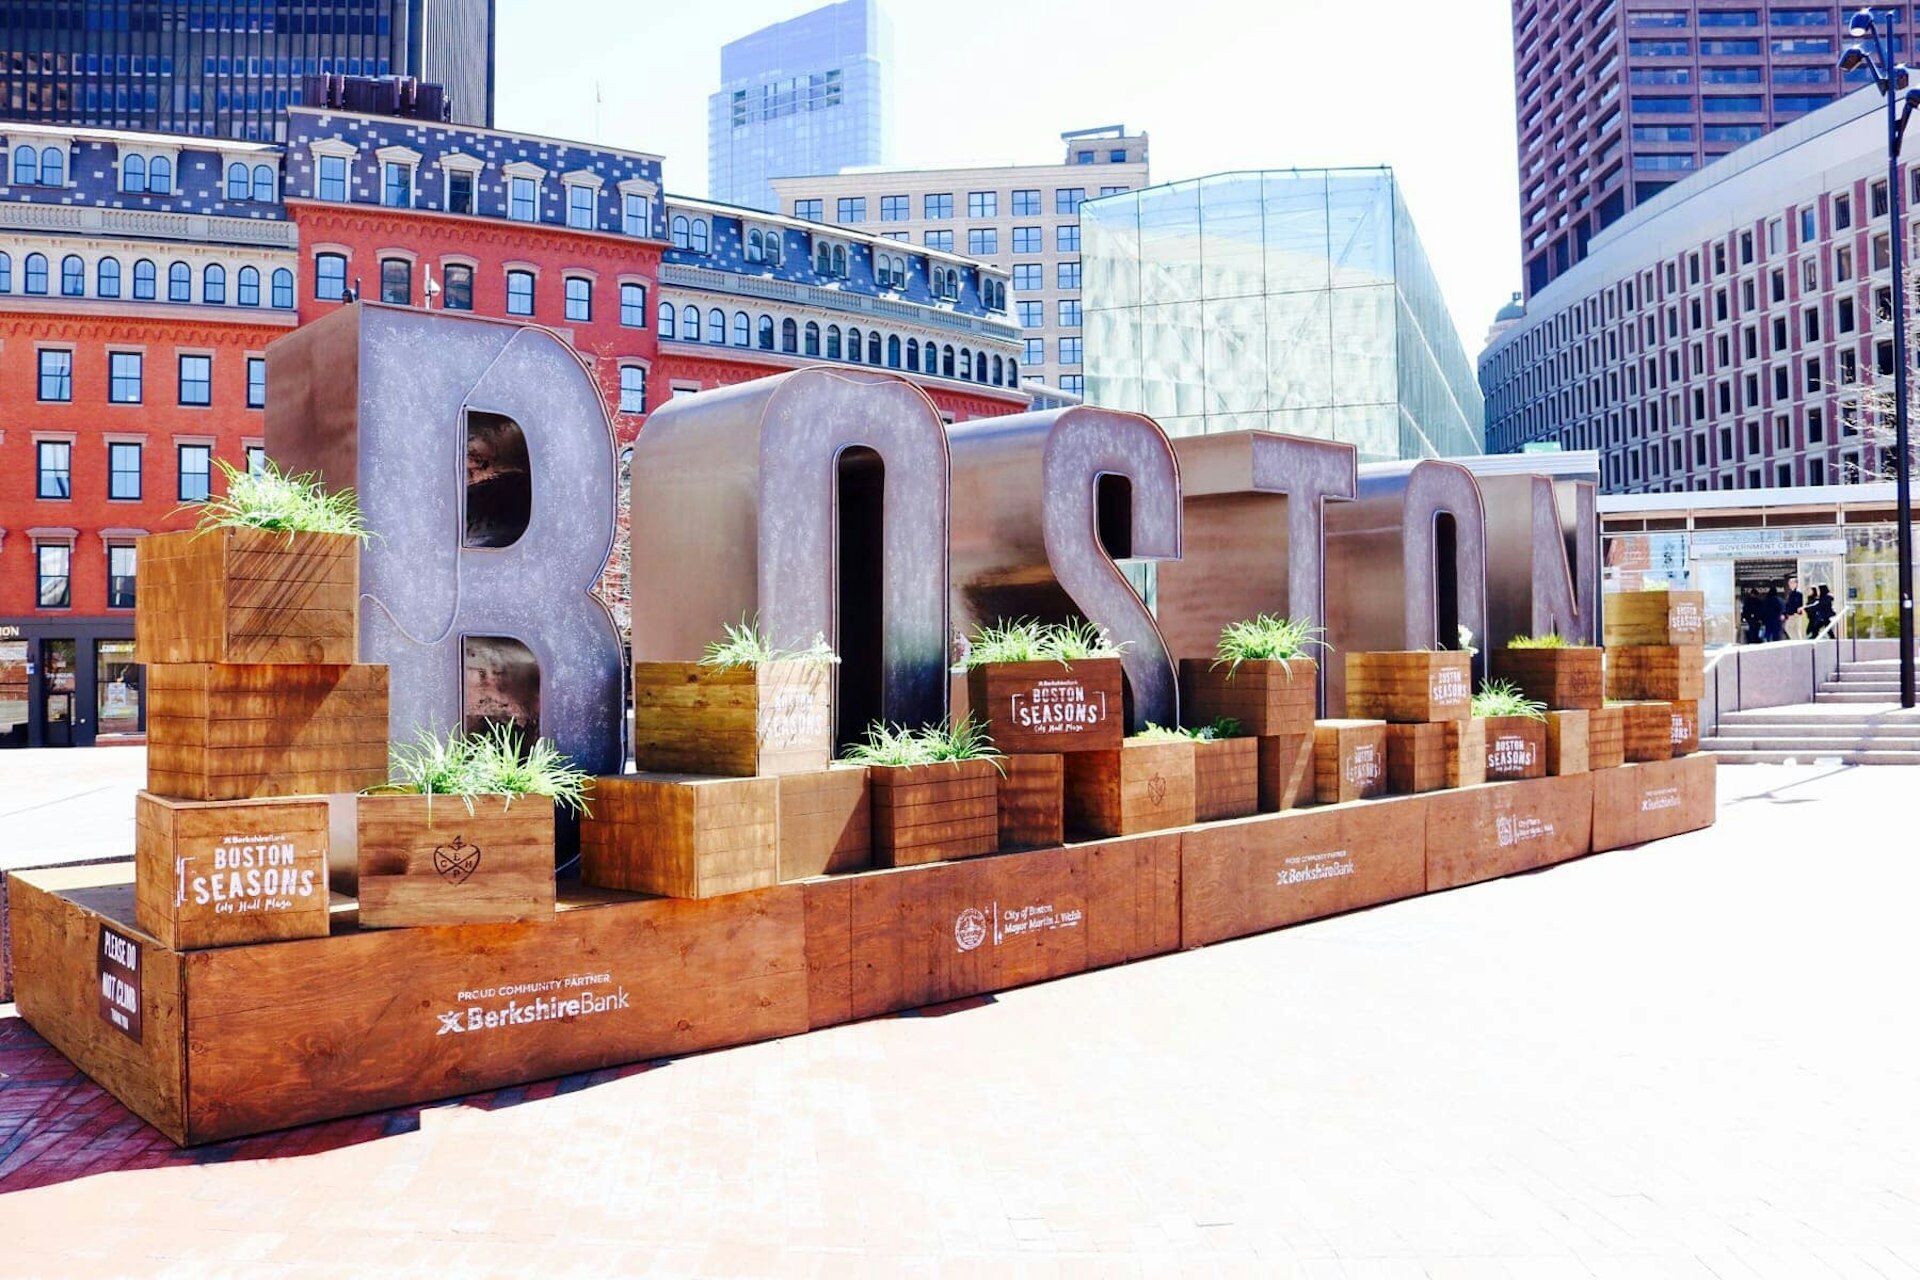 Boston sculpture in city center